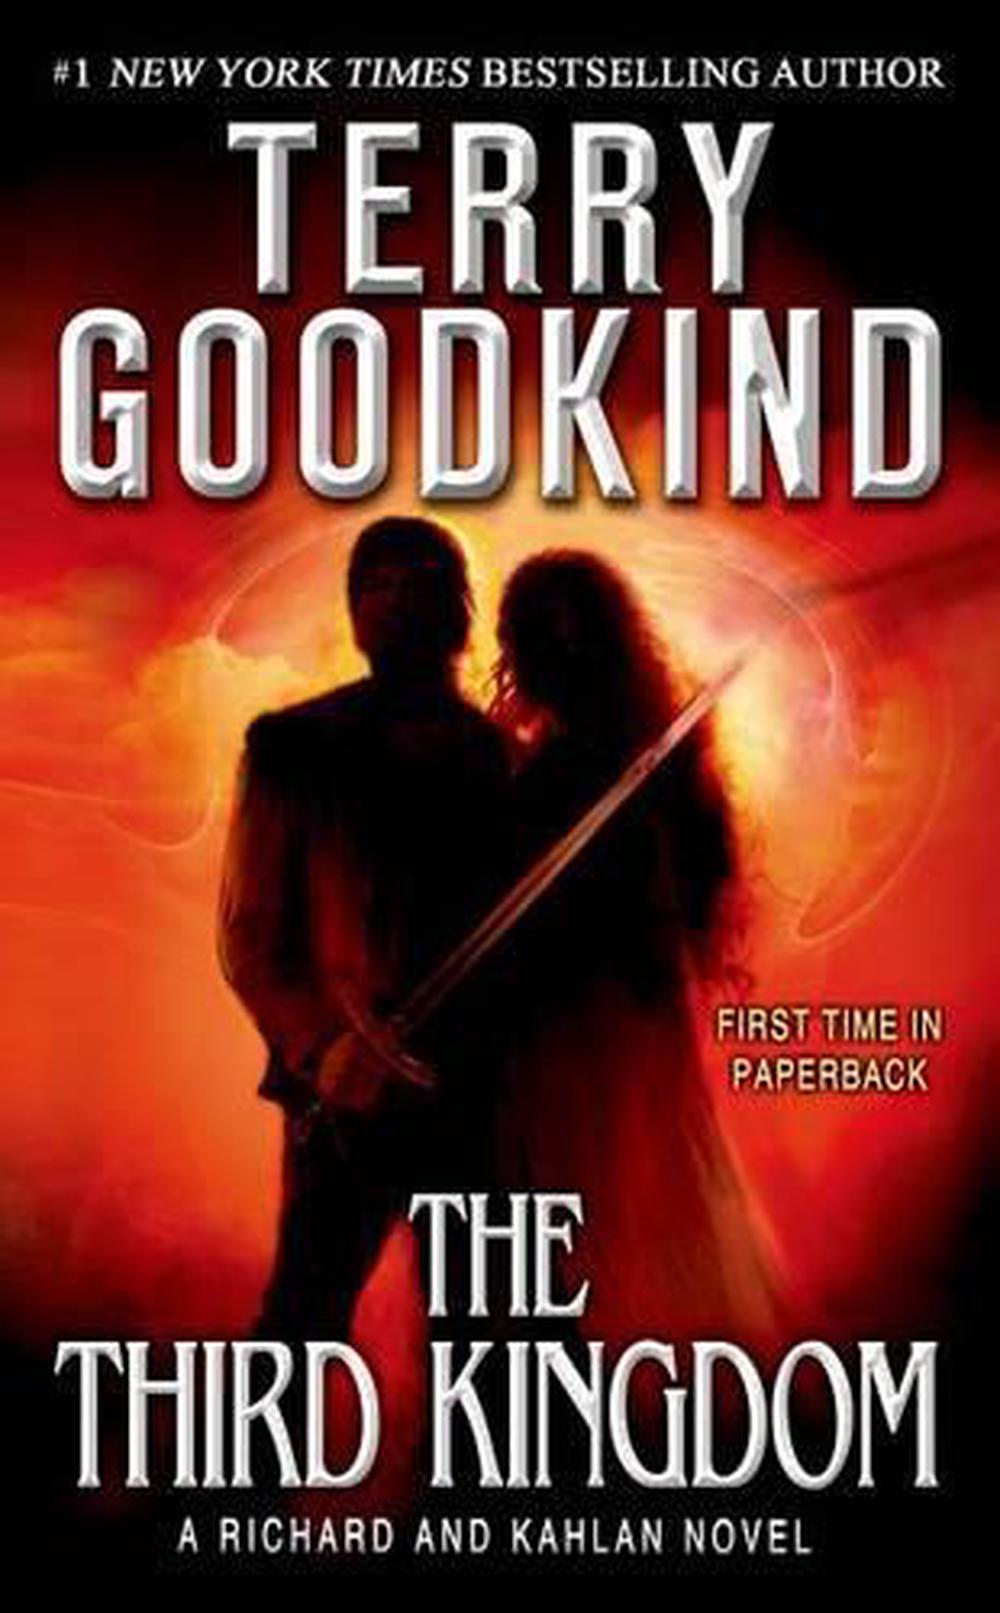 the third kingdom terry goodkind pdf